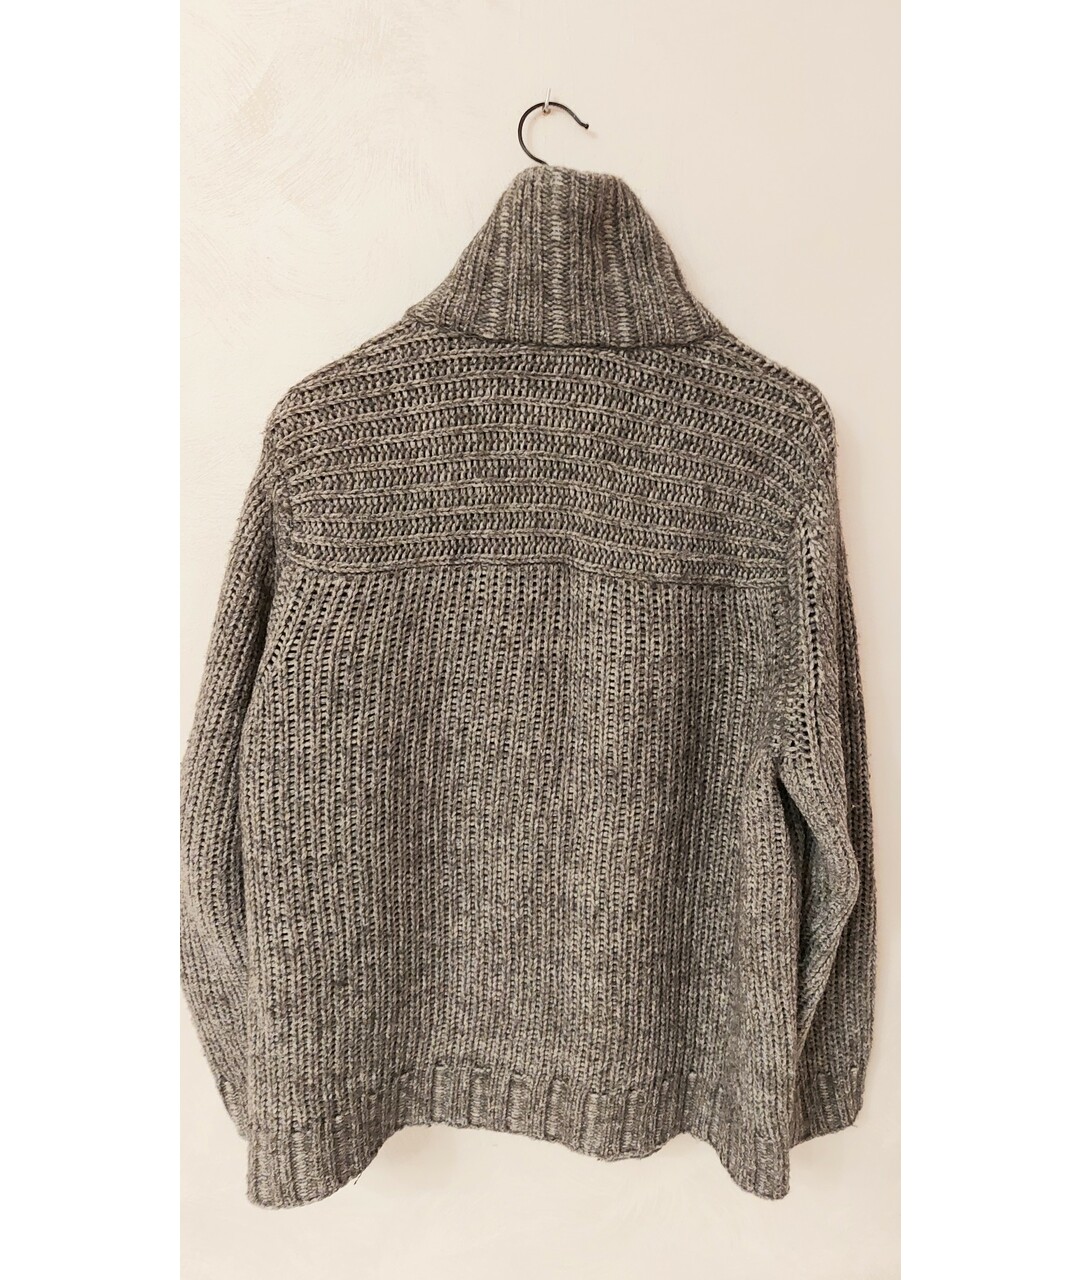 HUGO BOSS Серый шерстяной джемпер / свитер, фото 2